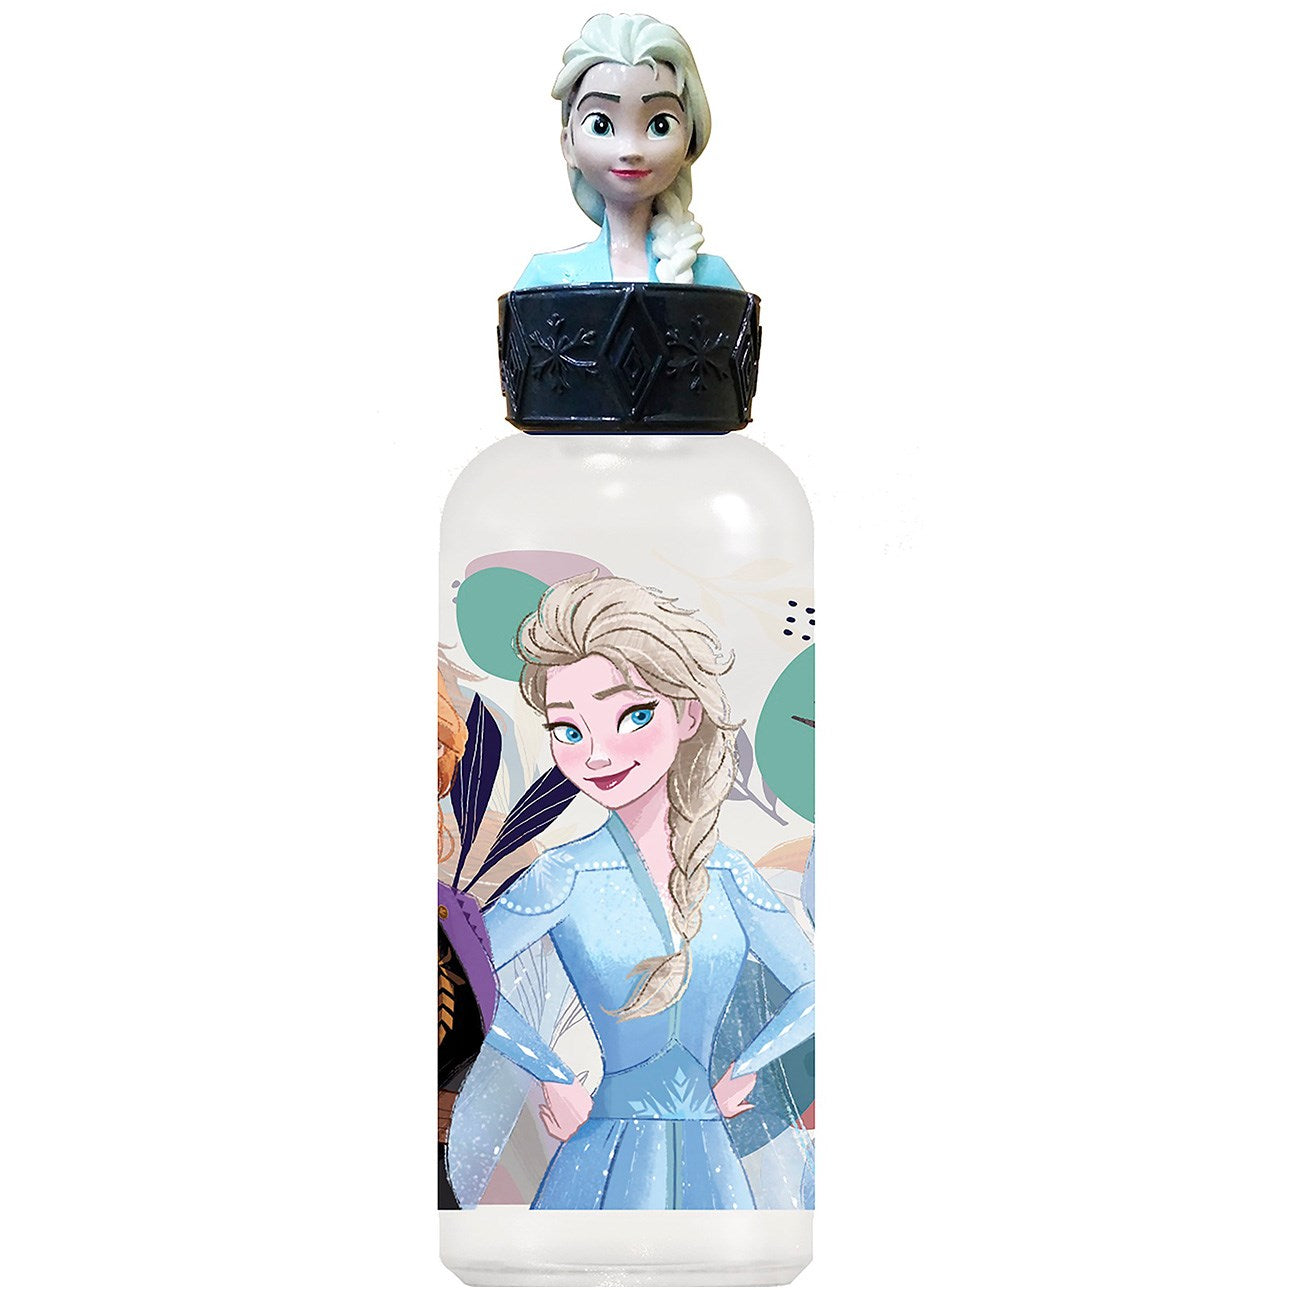 Euromic Frozen water bottle with 3D shape top